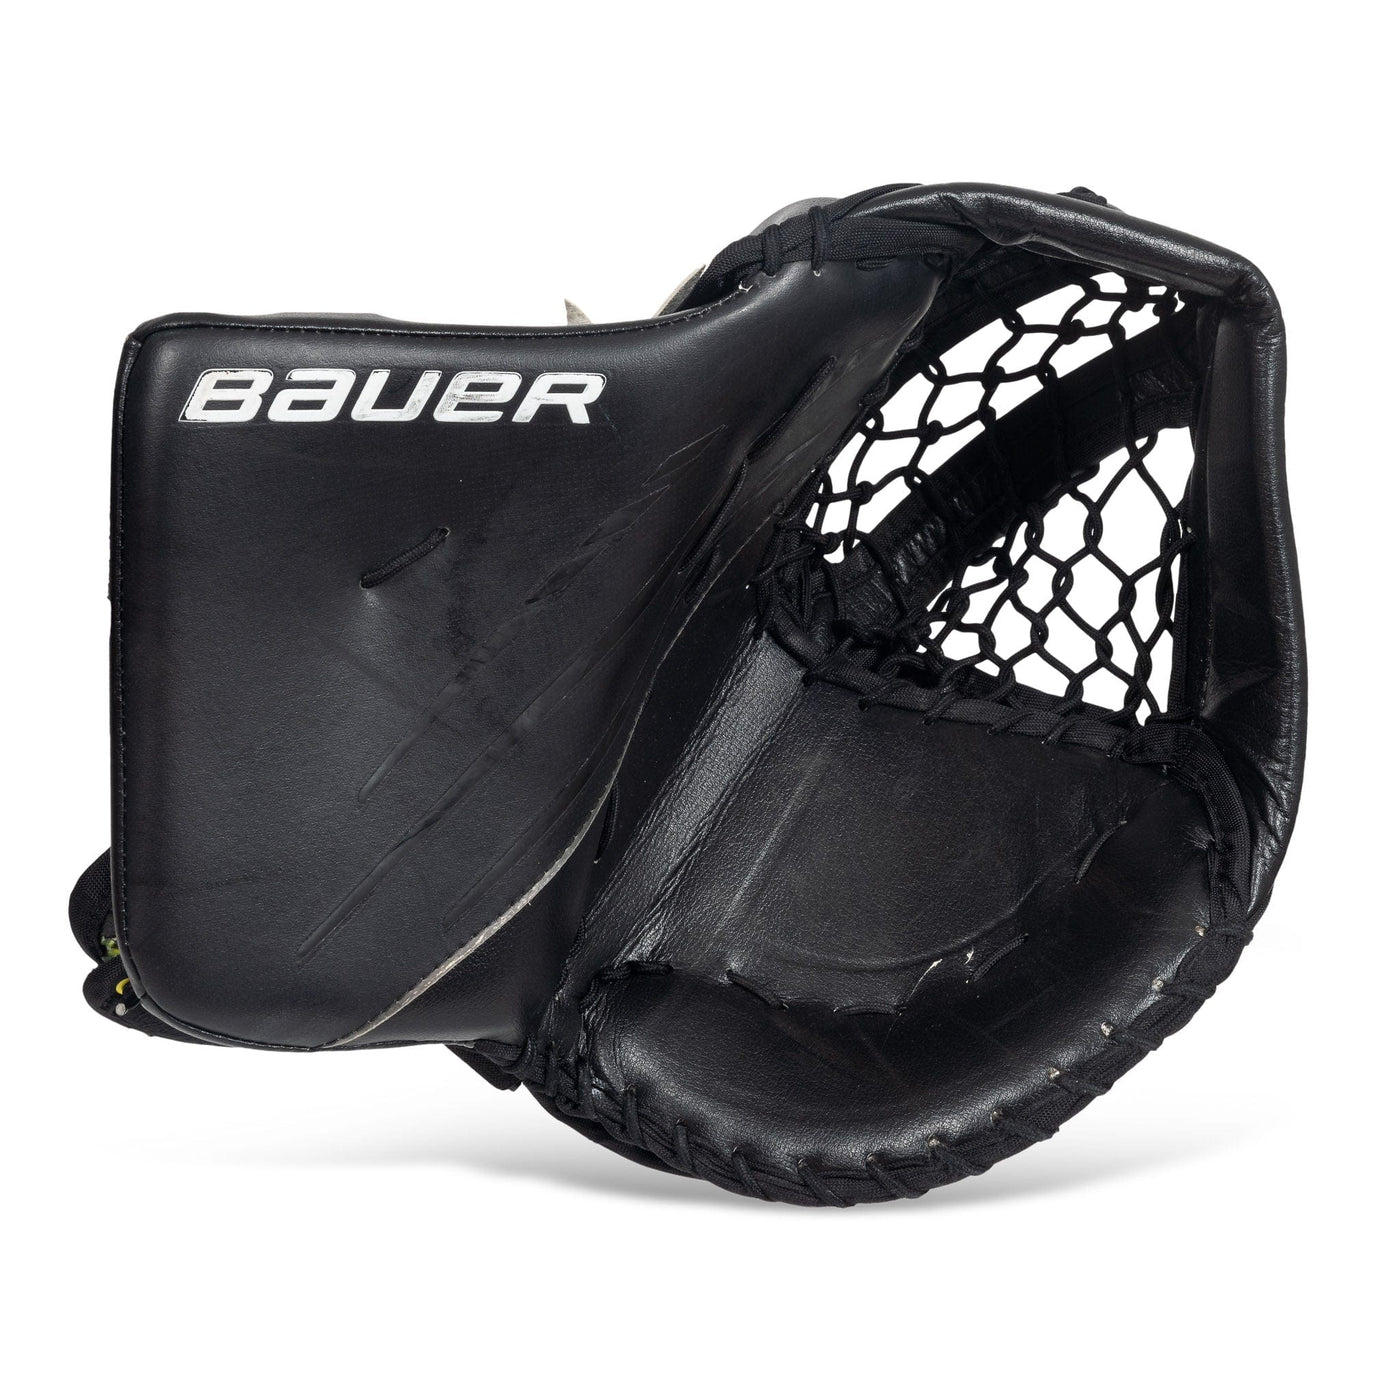 Bauer Vapor HyperLite Senior Goalie Glove Set - USED #2 - TheHockeyShop.com